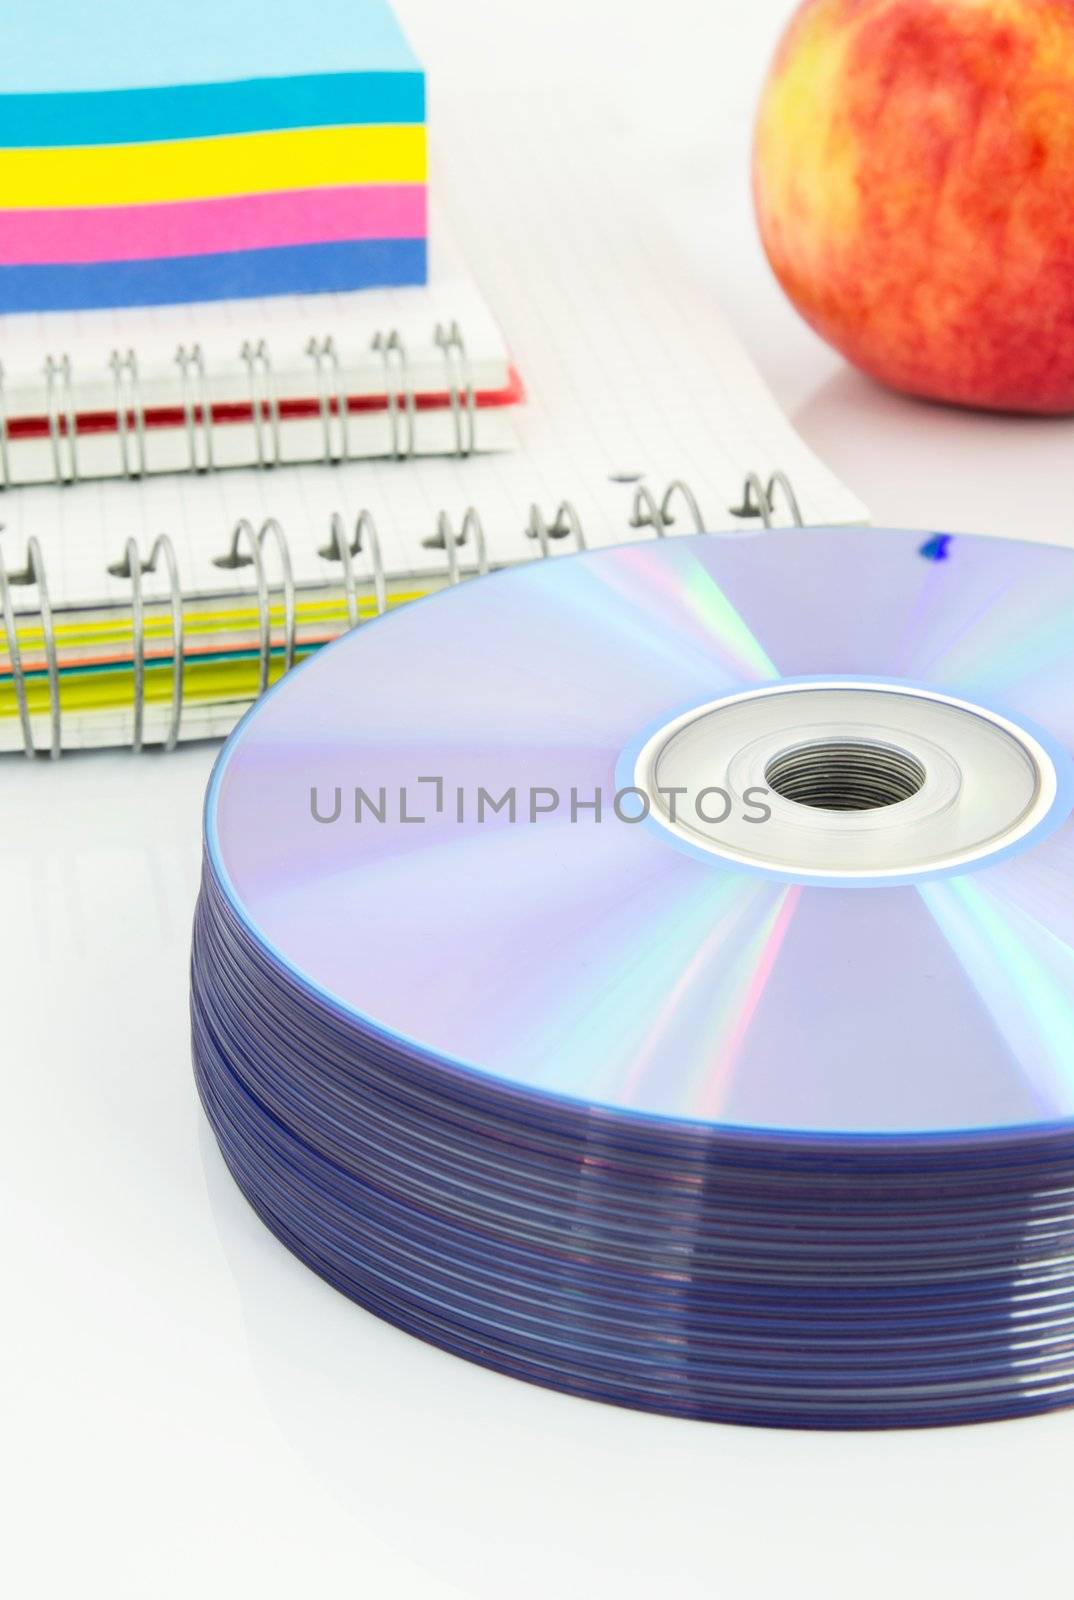 Compact discs, color paper, copybook, apple on white desk